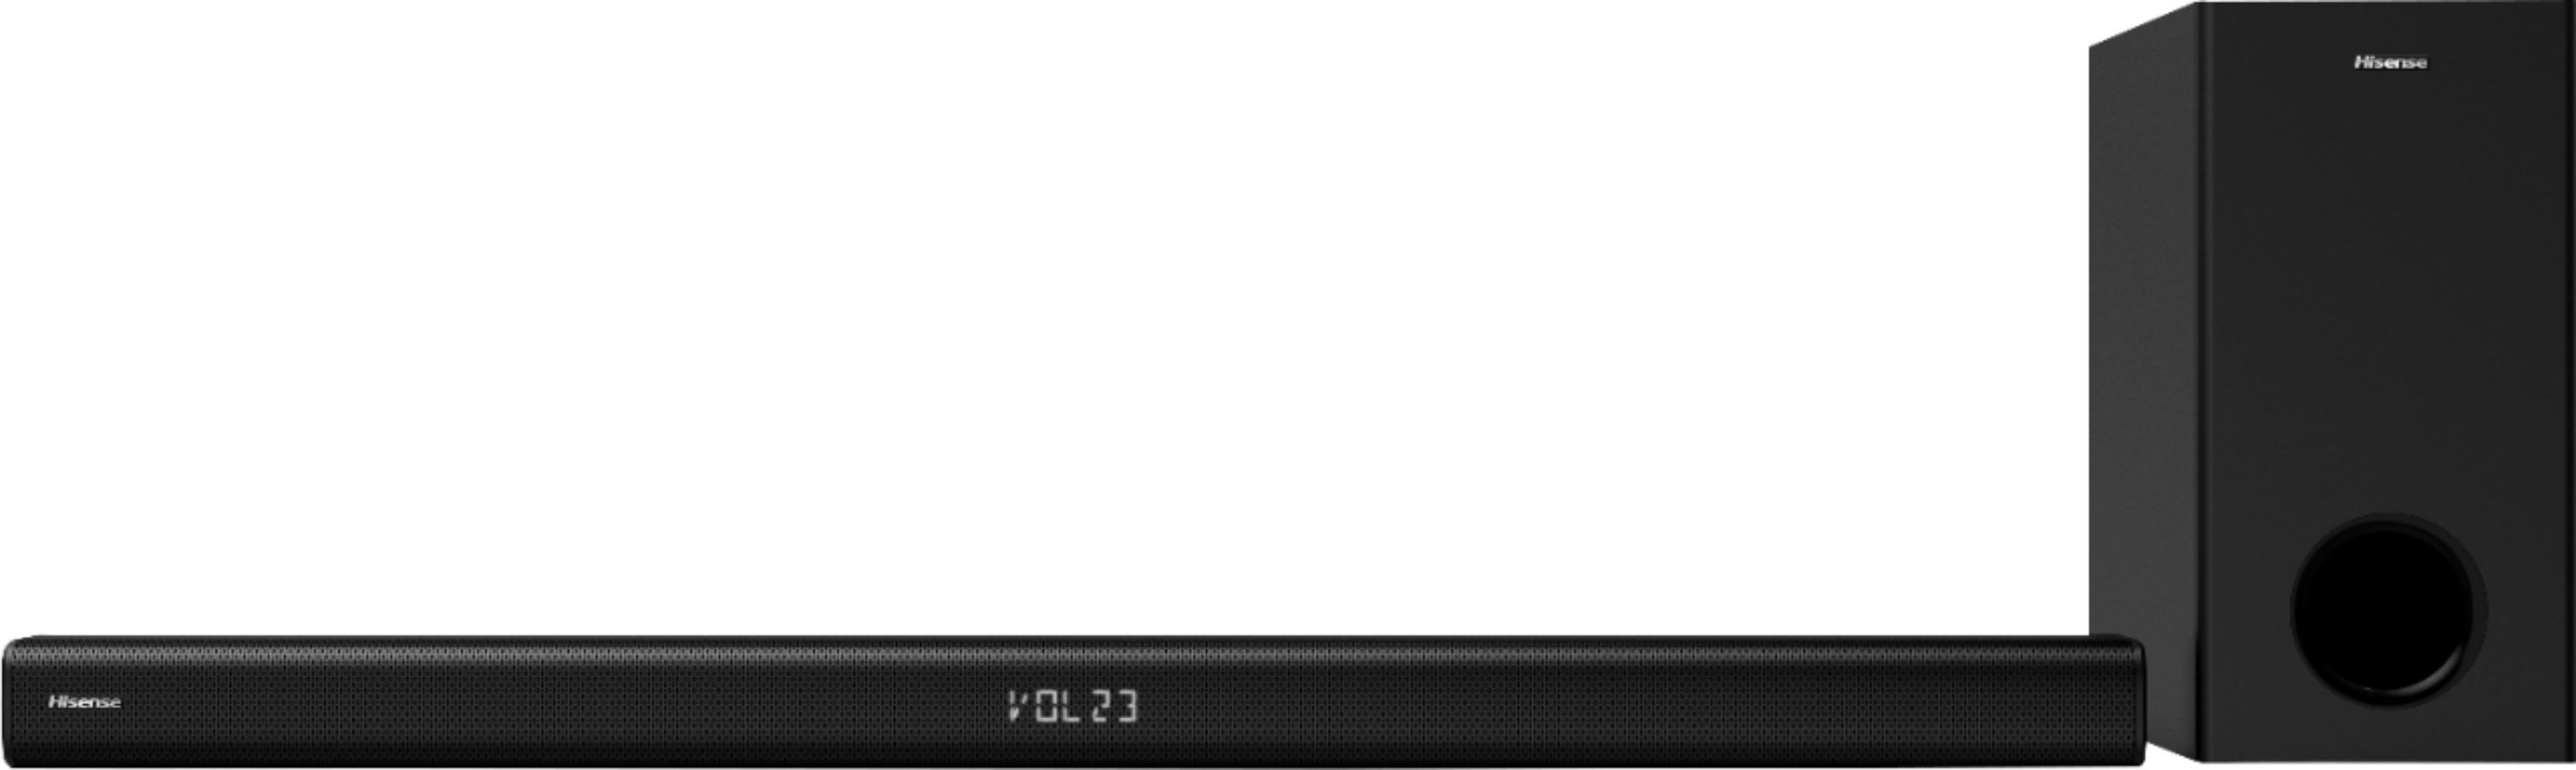 Best Buy: Hisense 2.1-Channel Soundbar with Wireless Subwoofer Black HS218